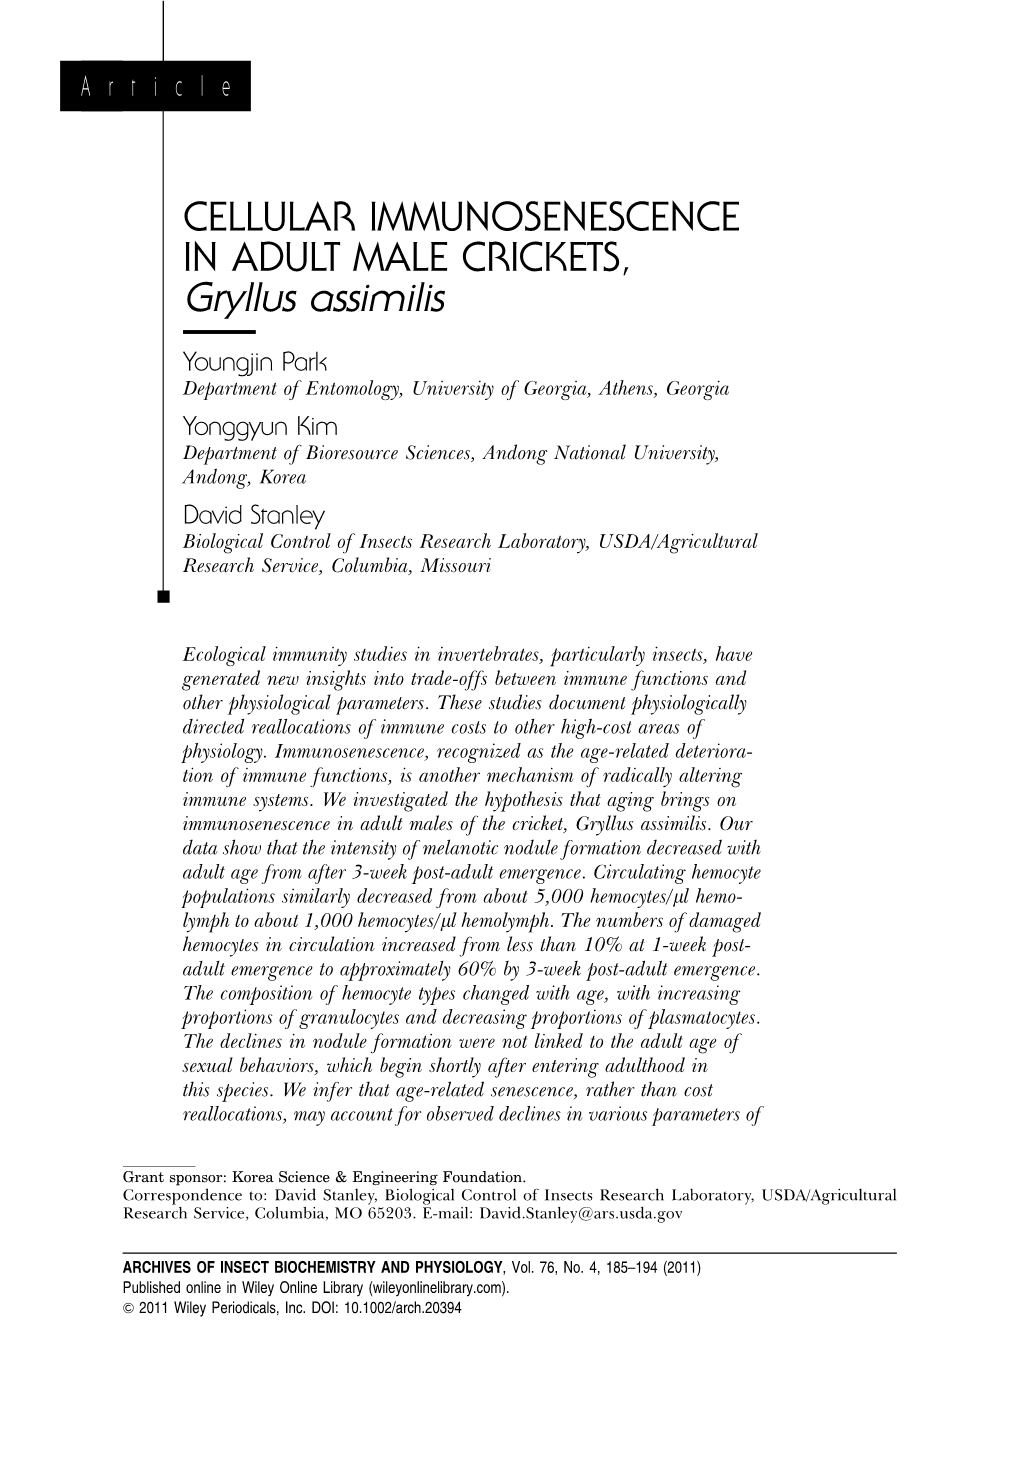 CELLULAR IMMUNOSENESCENCE in ADULT MALE CRICKETS, Gryllus Assimilis